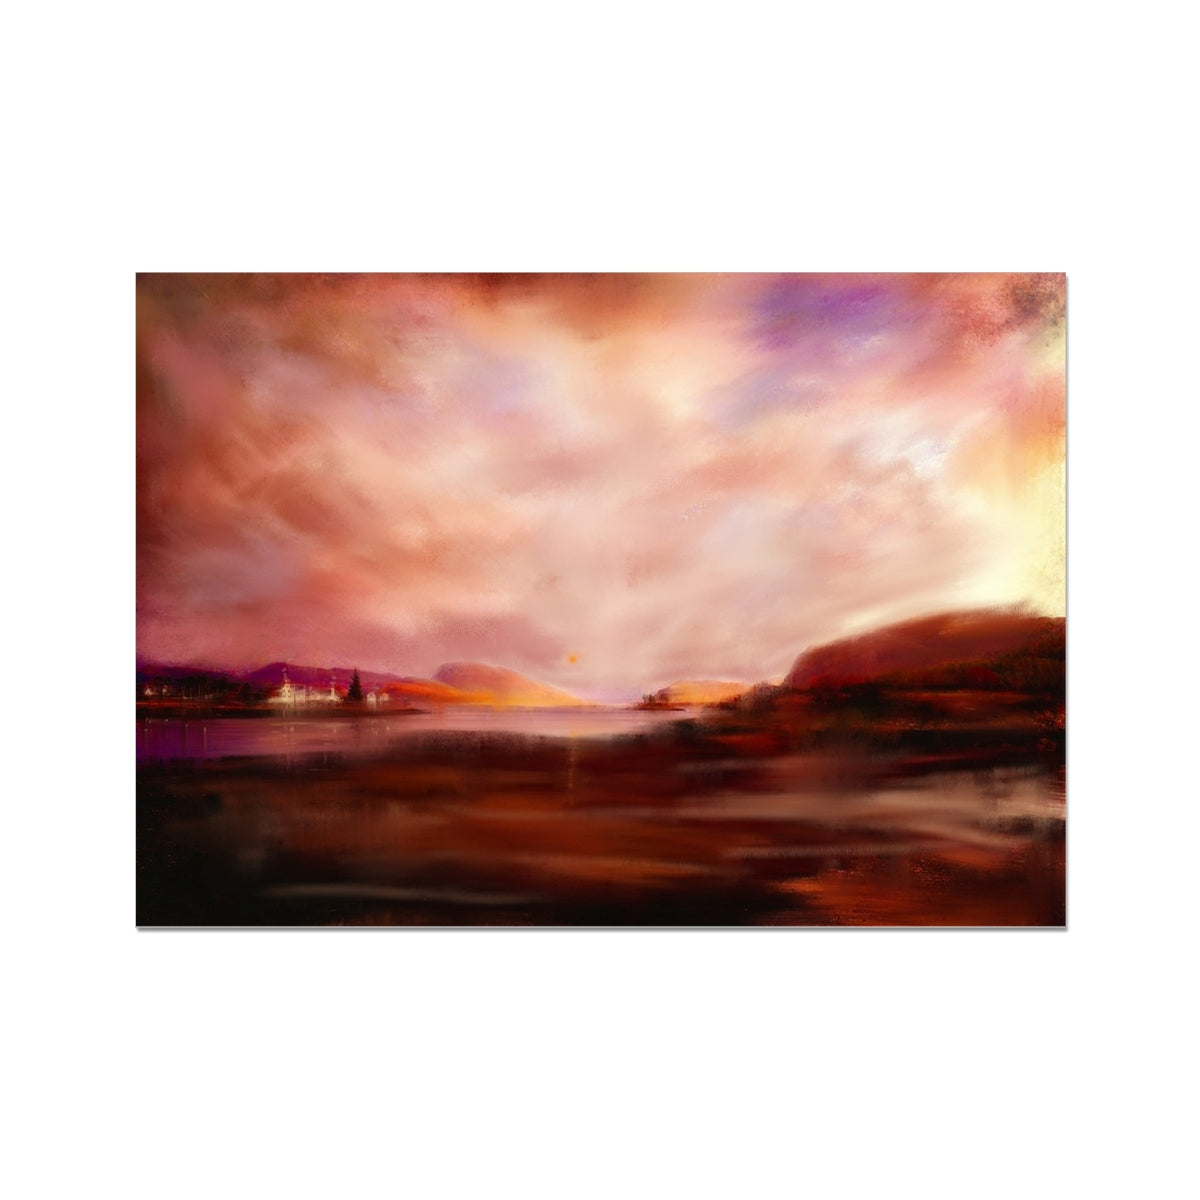 Plockton Sunset Painting | Fine Art Prints From Scotland-Unframed Prints-Scottish Highlands & Lowlands Art Gallery-A2 Landscape-Paintings, Prints, Homeware, Art Gifts From Scotland By Scottish Artist Kevin Hunter